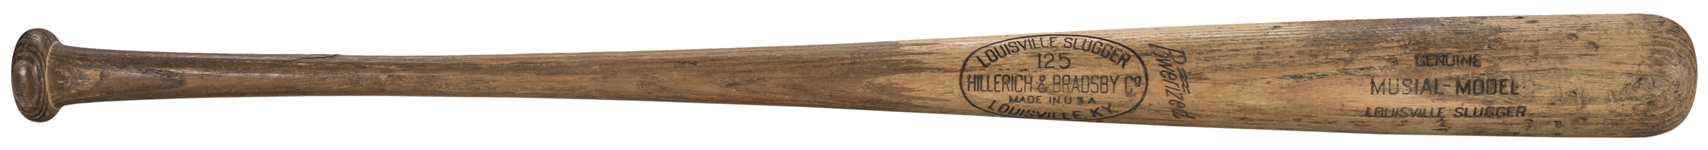 1950-1953 Stan Musial Game Used Hillerich & Bradsby M117 Model Bat - 3 Straight Batting Title Seasons (1950-52) (PSA/DNA GU 9.5) 